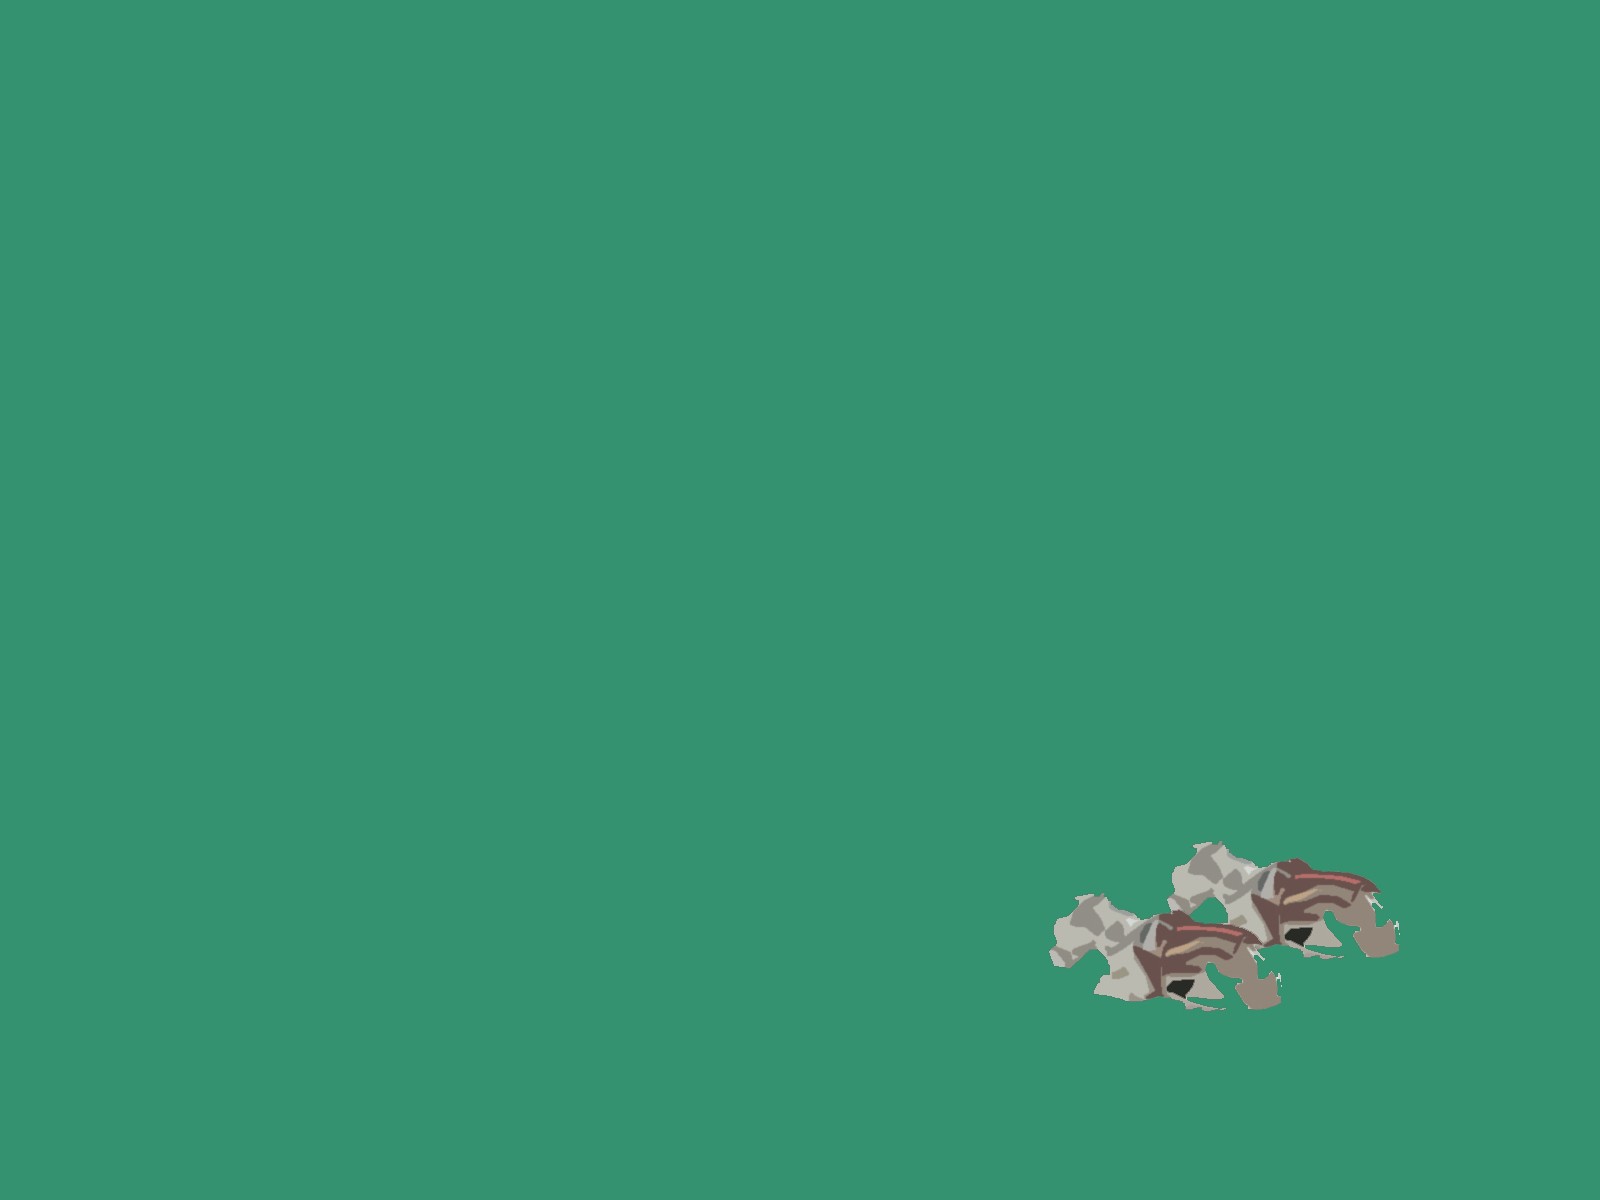 General 1600x1200 minimalism green background simple background artwork